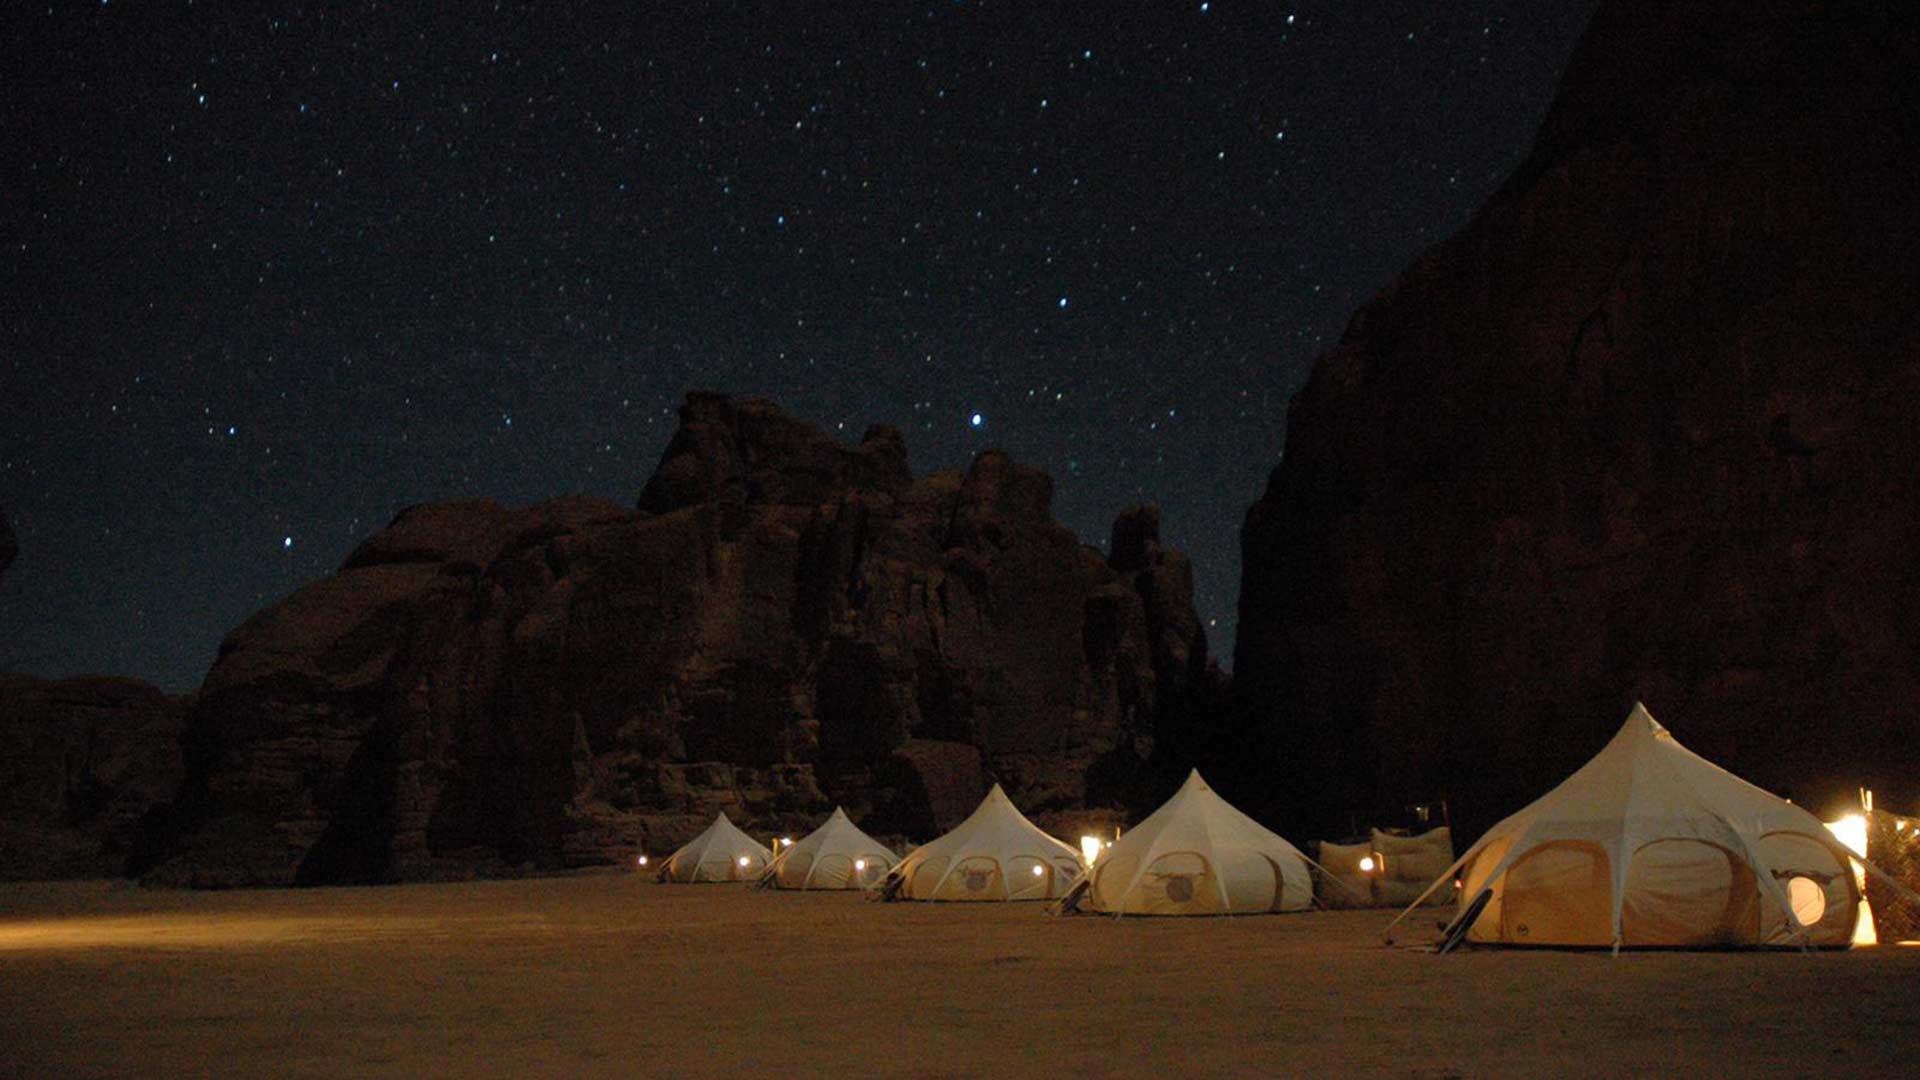 Warda Camp on the Ennedi Massif in the Sahara Desert offers amazing stargazing, Chad.